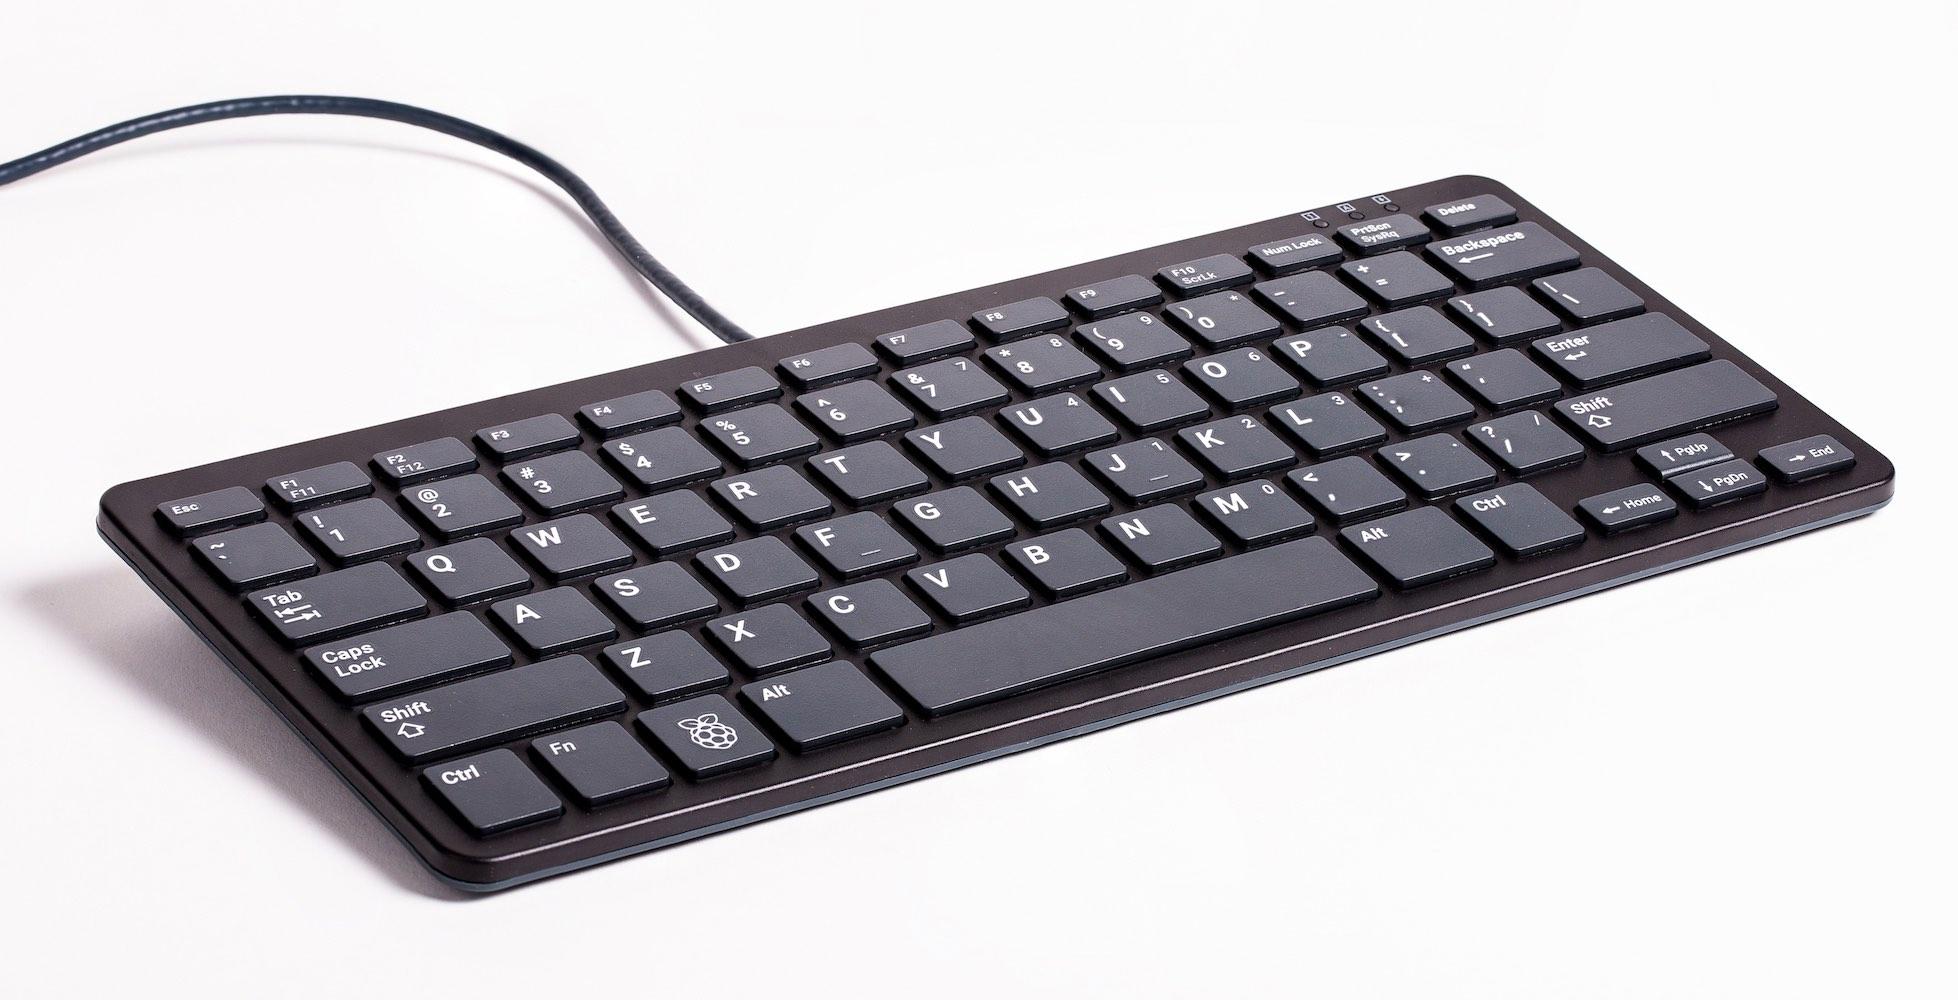 offizielle Raspberry Pi Tastatur, US-Layout, inkl. 3 Port USB Hub, schwarz/grau